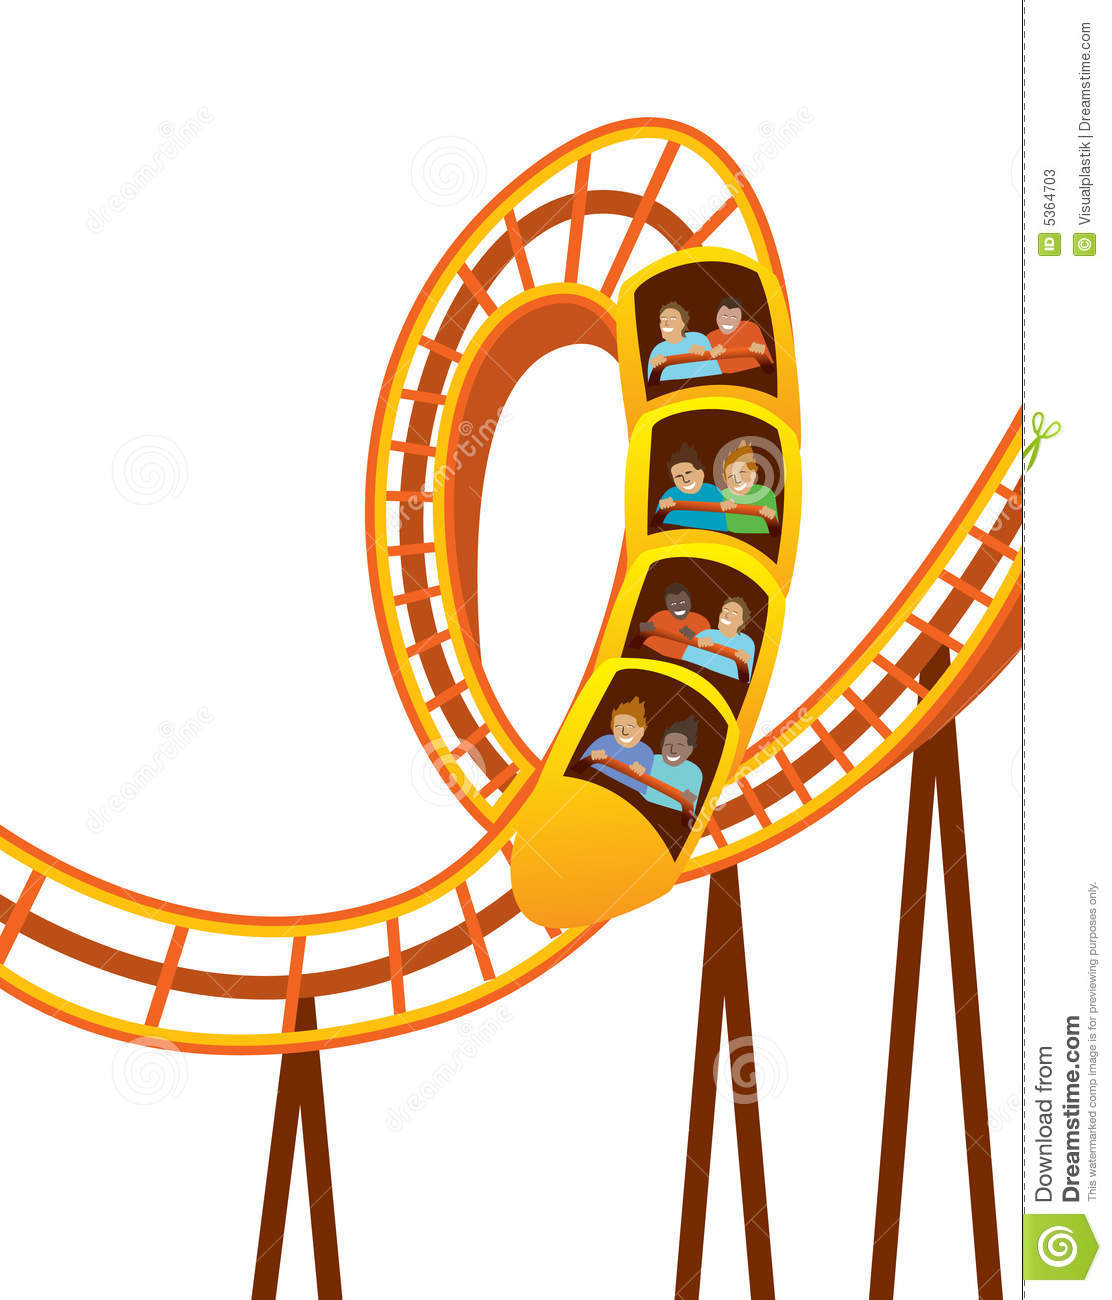 Clip Art Roller Coaster Clip Art roller coaster clipart kids clipartfox roller